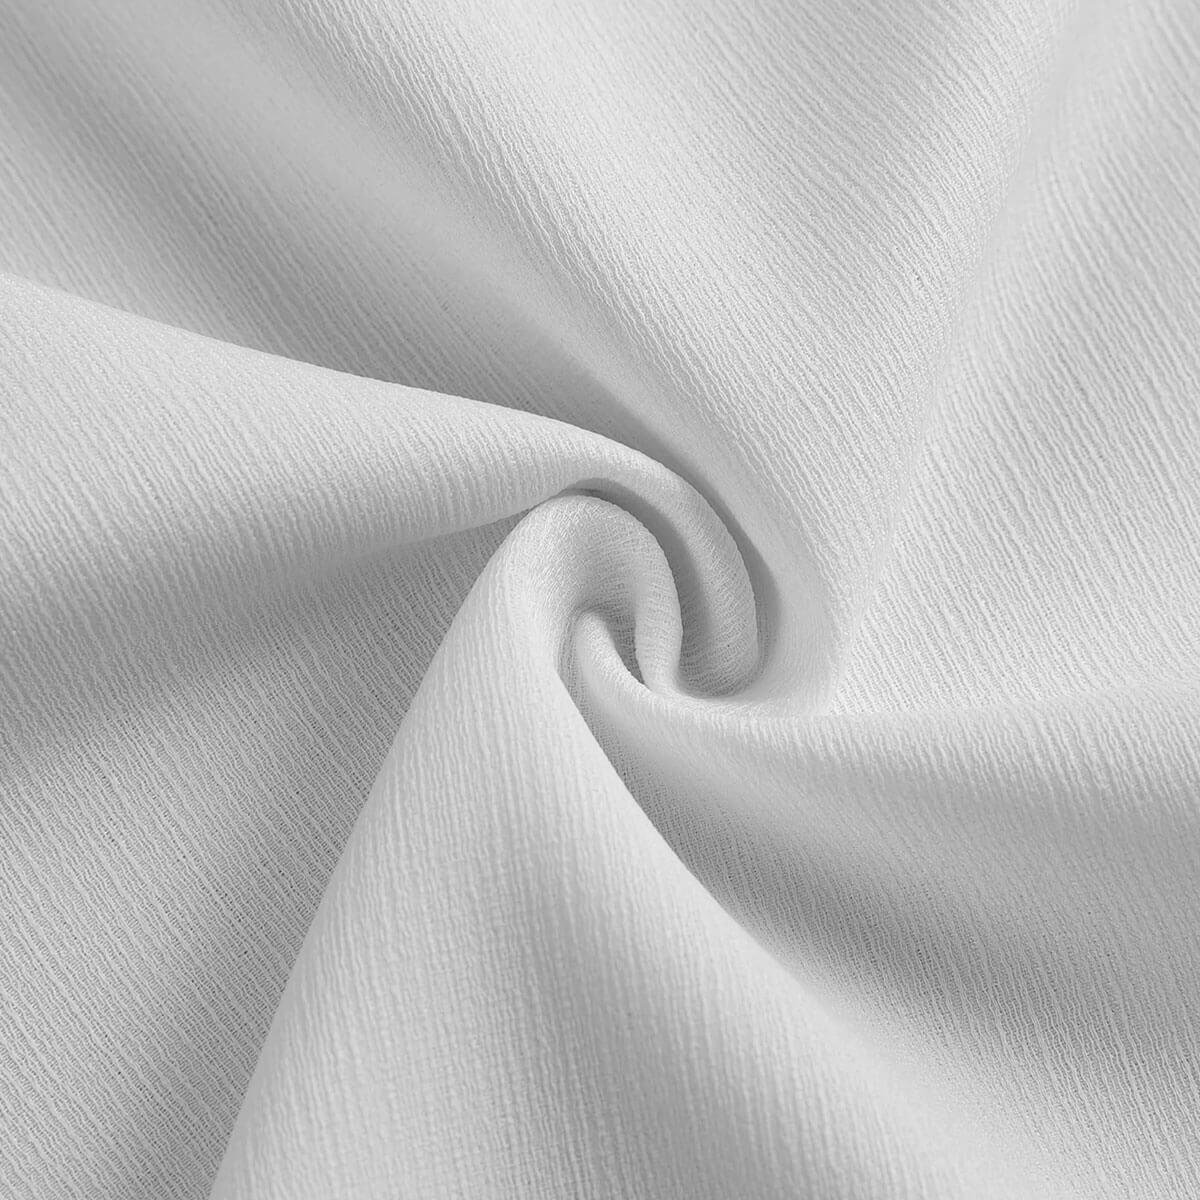 High-quality chiffon fabric for a lightweight, airy feel